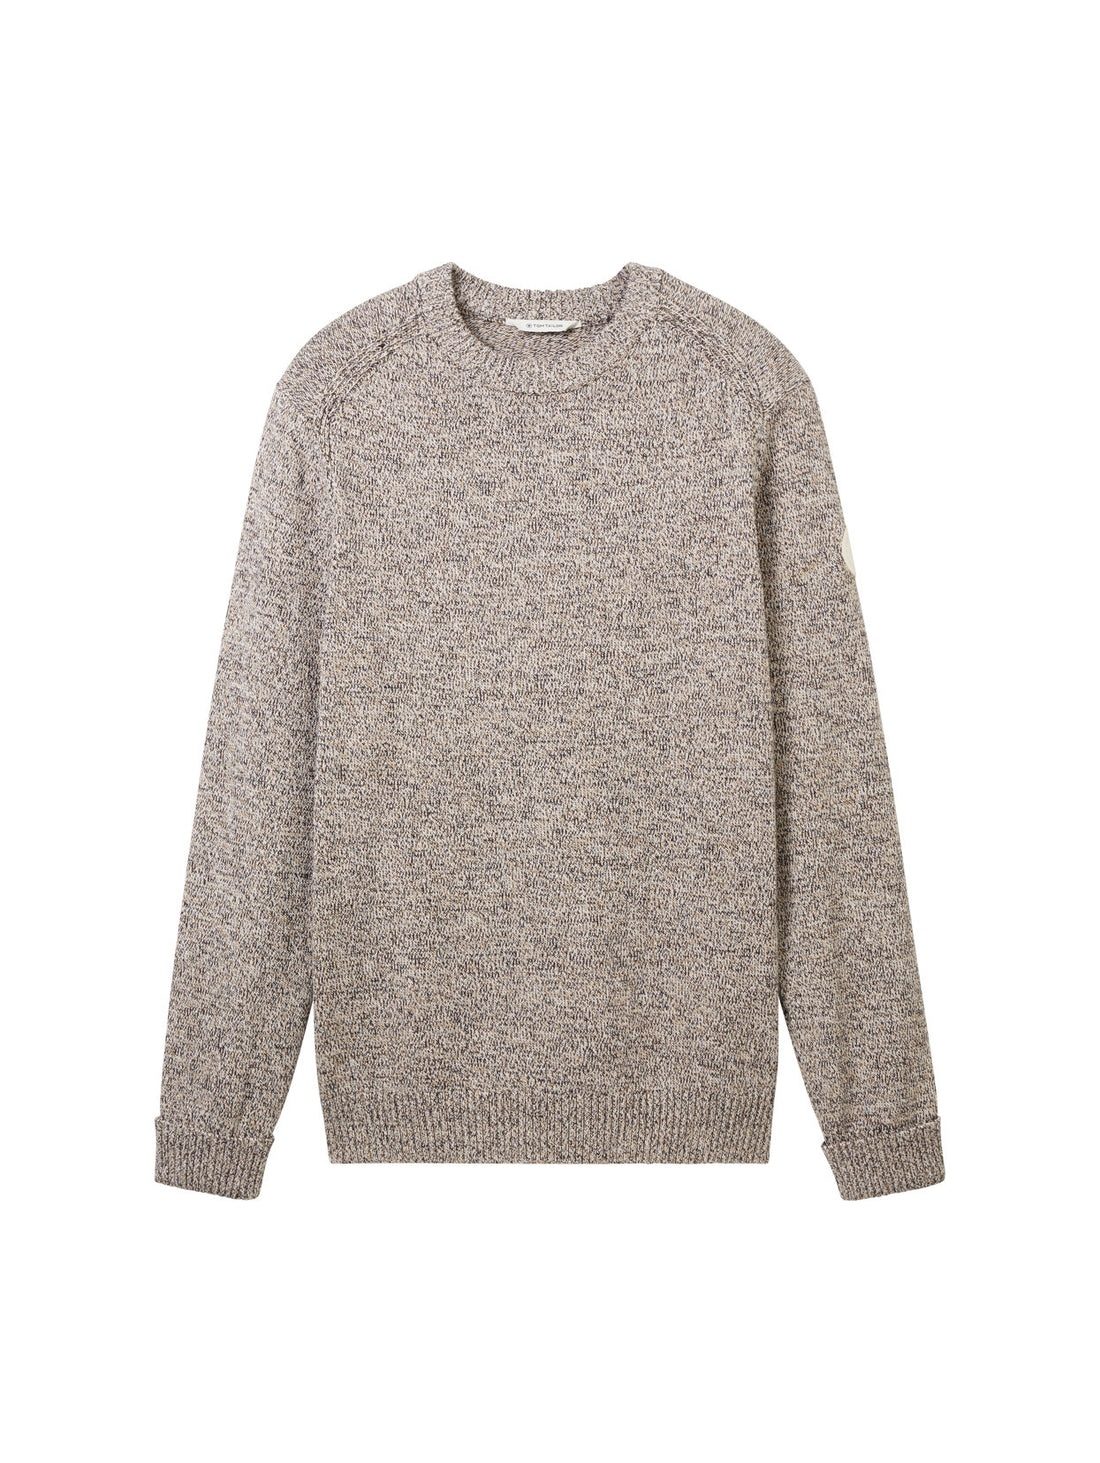 Knitted Sweater With Round Neckline_1038246_32742_01